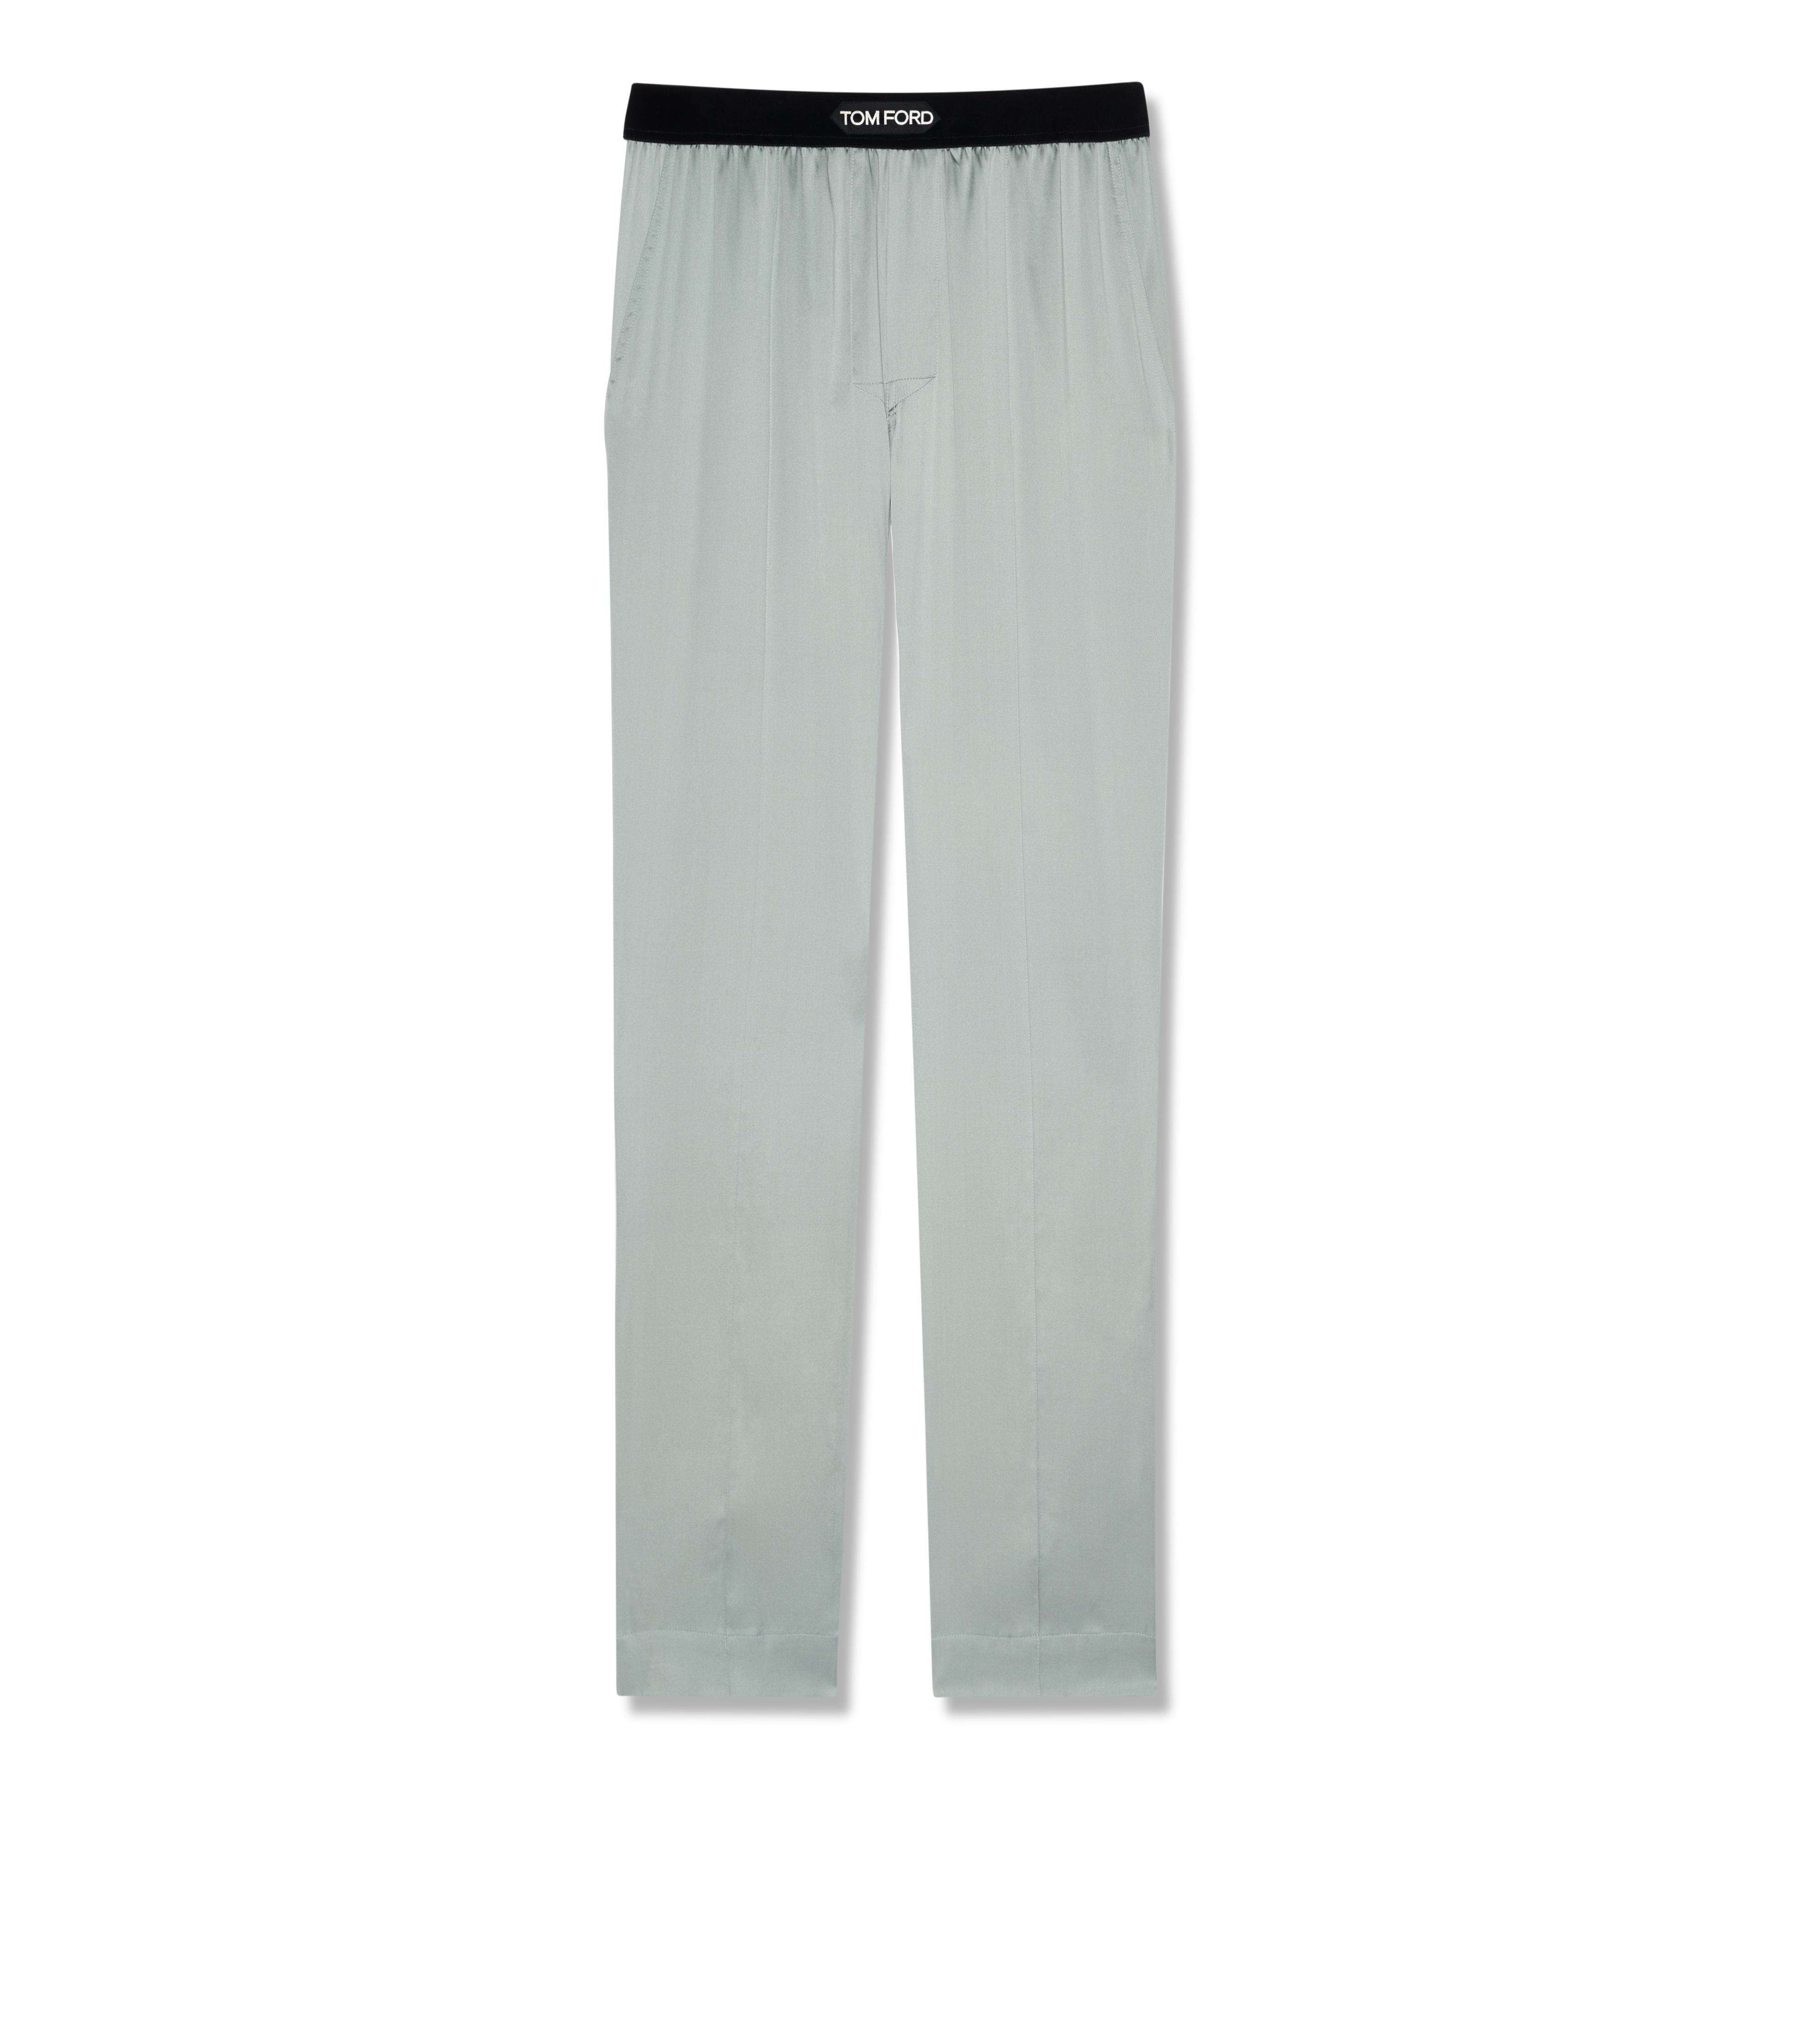 Tom Ford Silk Pajama Pants - M Black